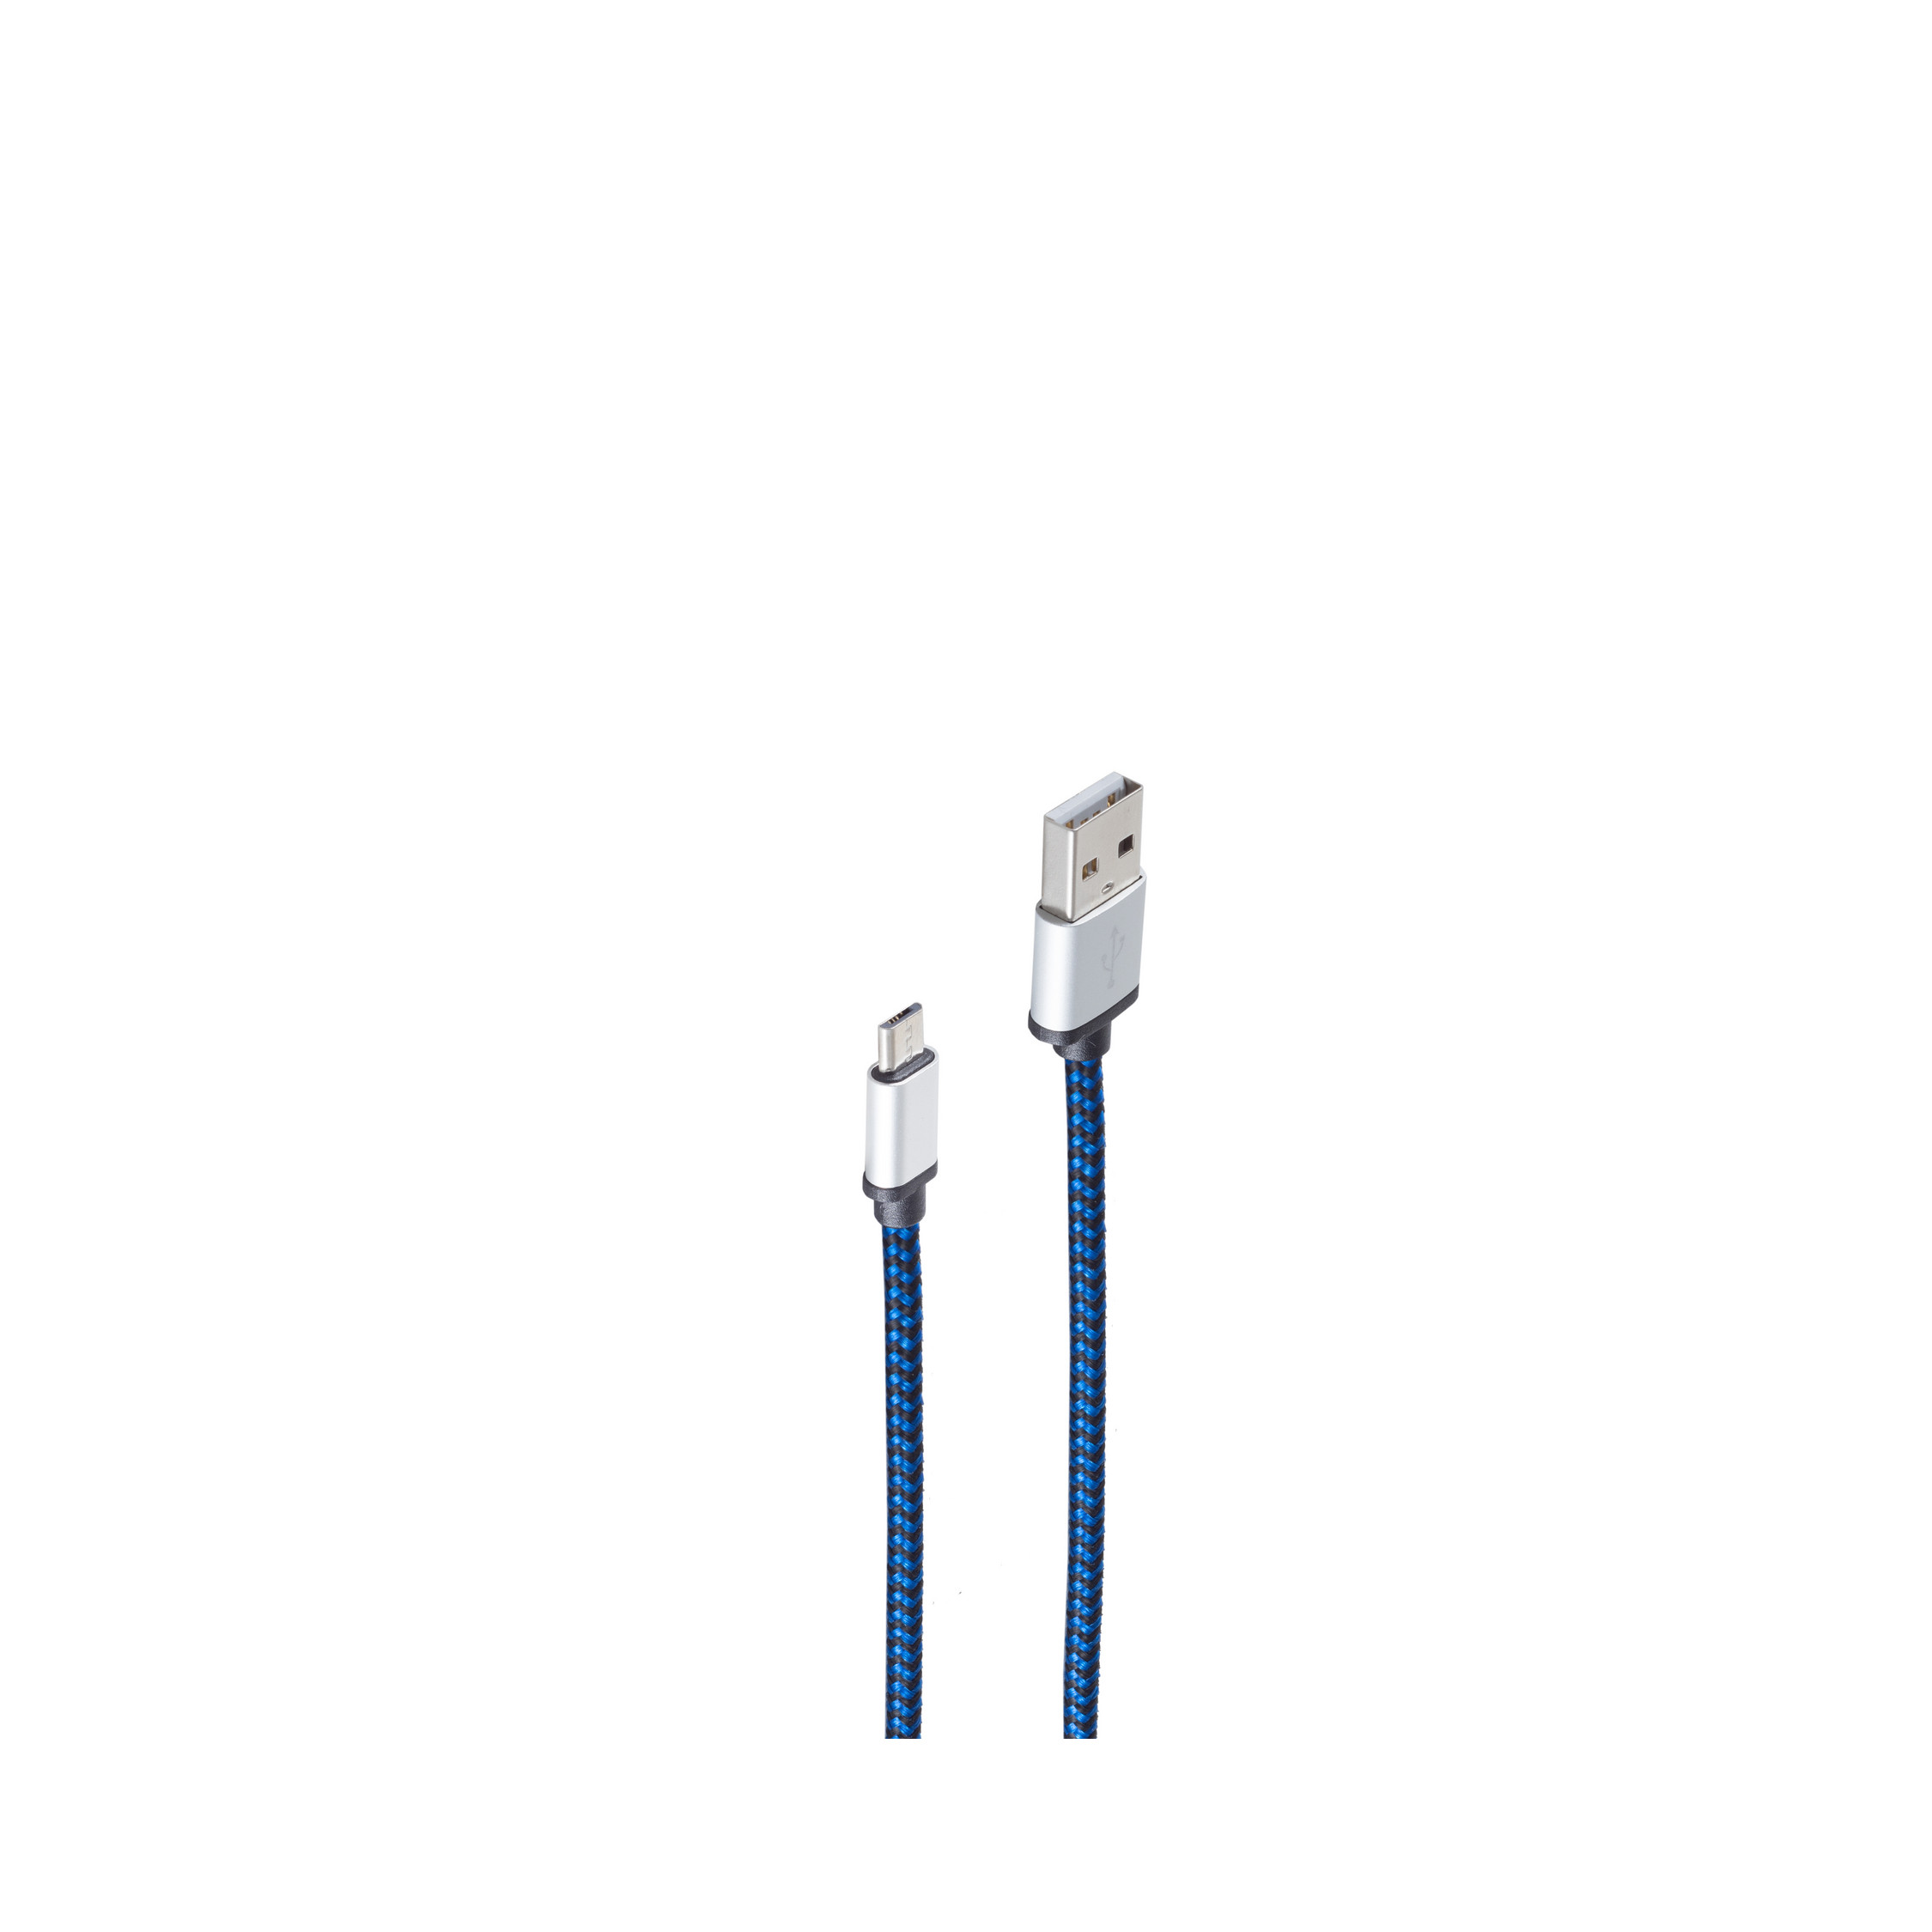 USB USB-Ladekabel SHIVERPEAKS A auf m, blau blau 2 Stecker 2m, B, Ladekabel, Micro USB